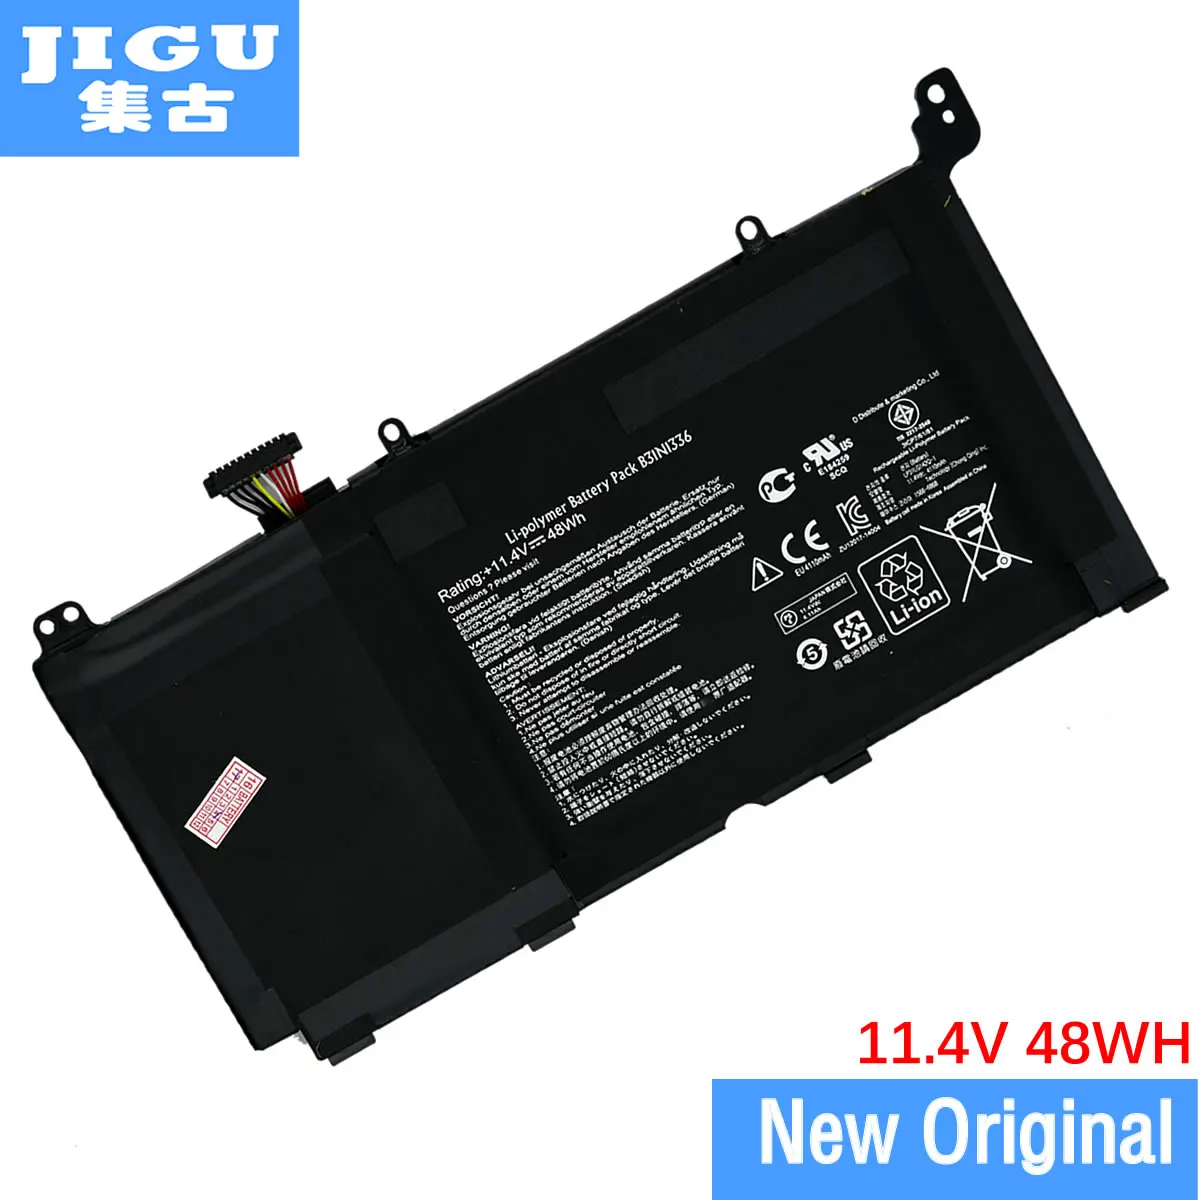 

JIGU Original laptop Battery B31N1336 For ASUS for VivoBook S551 S55IL S551LN-1A 11.4V 48WH B31N1336 BATTERIES